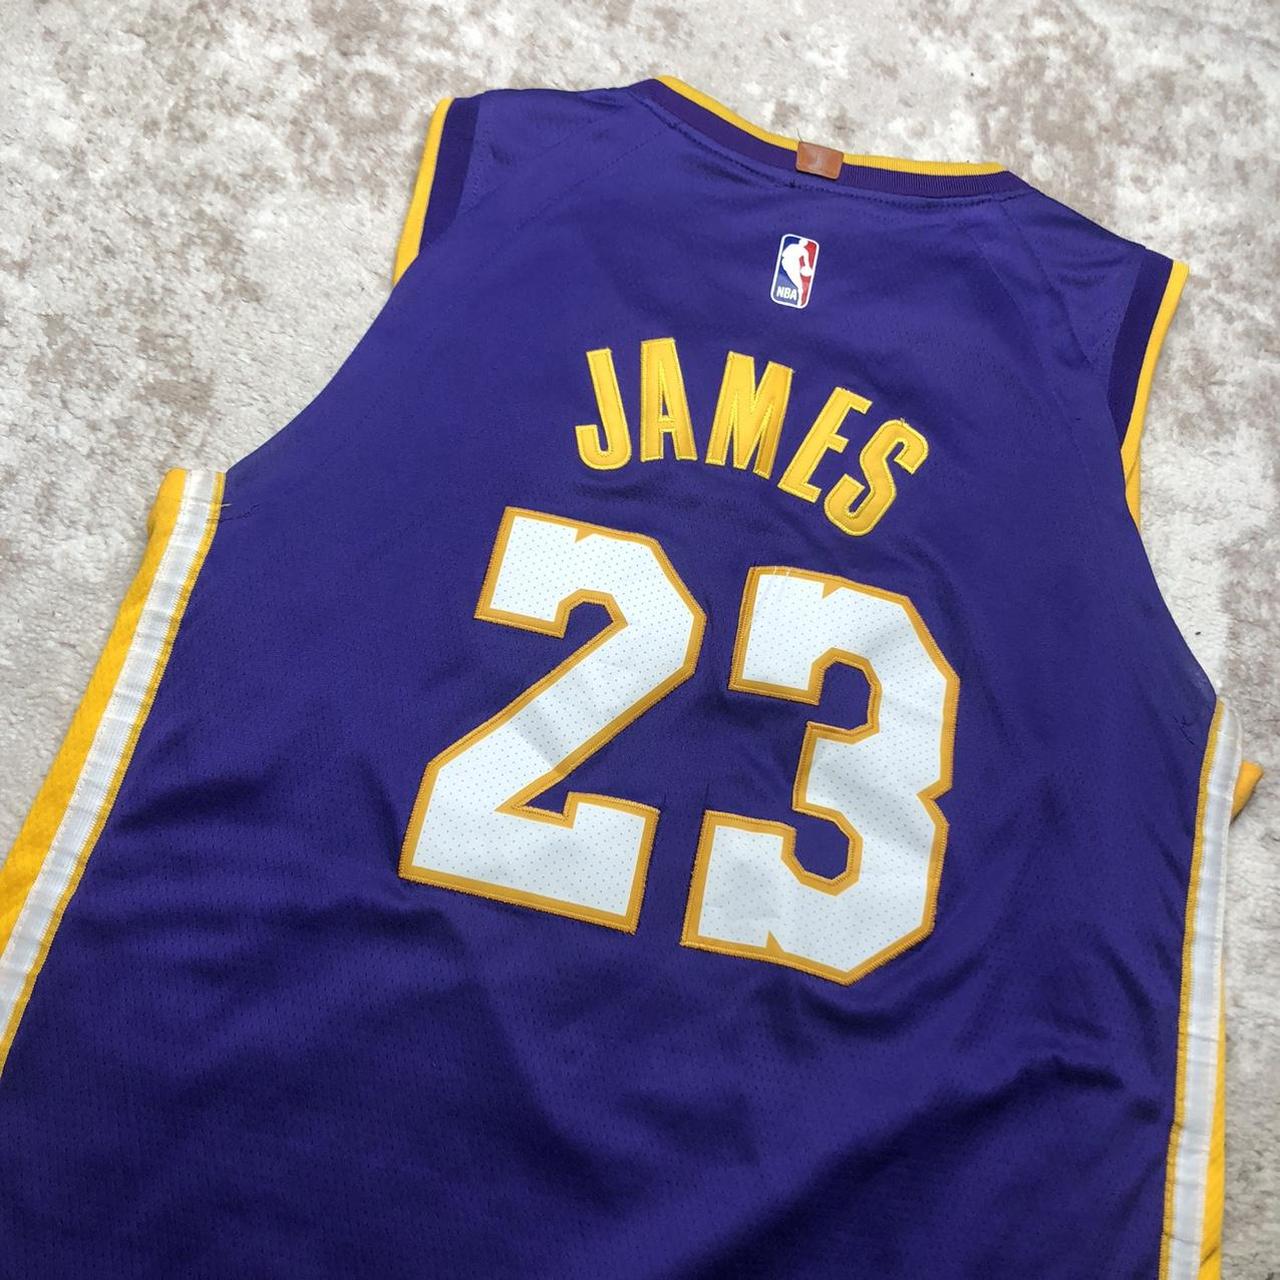 Reversible YMCA Junior Lakers #NBA Jersey No. 34 Size S - Depop